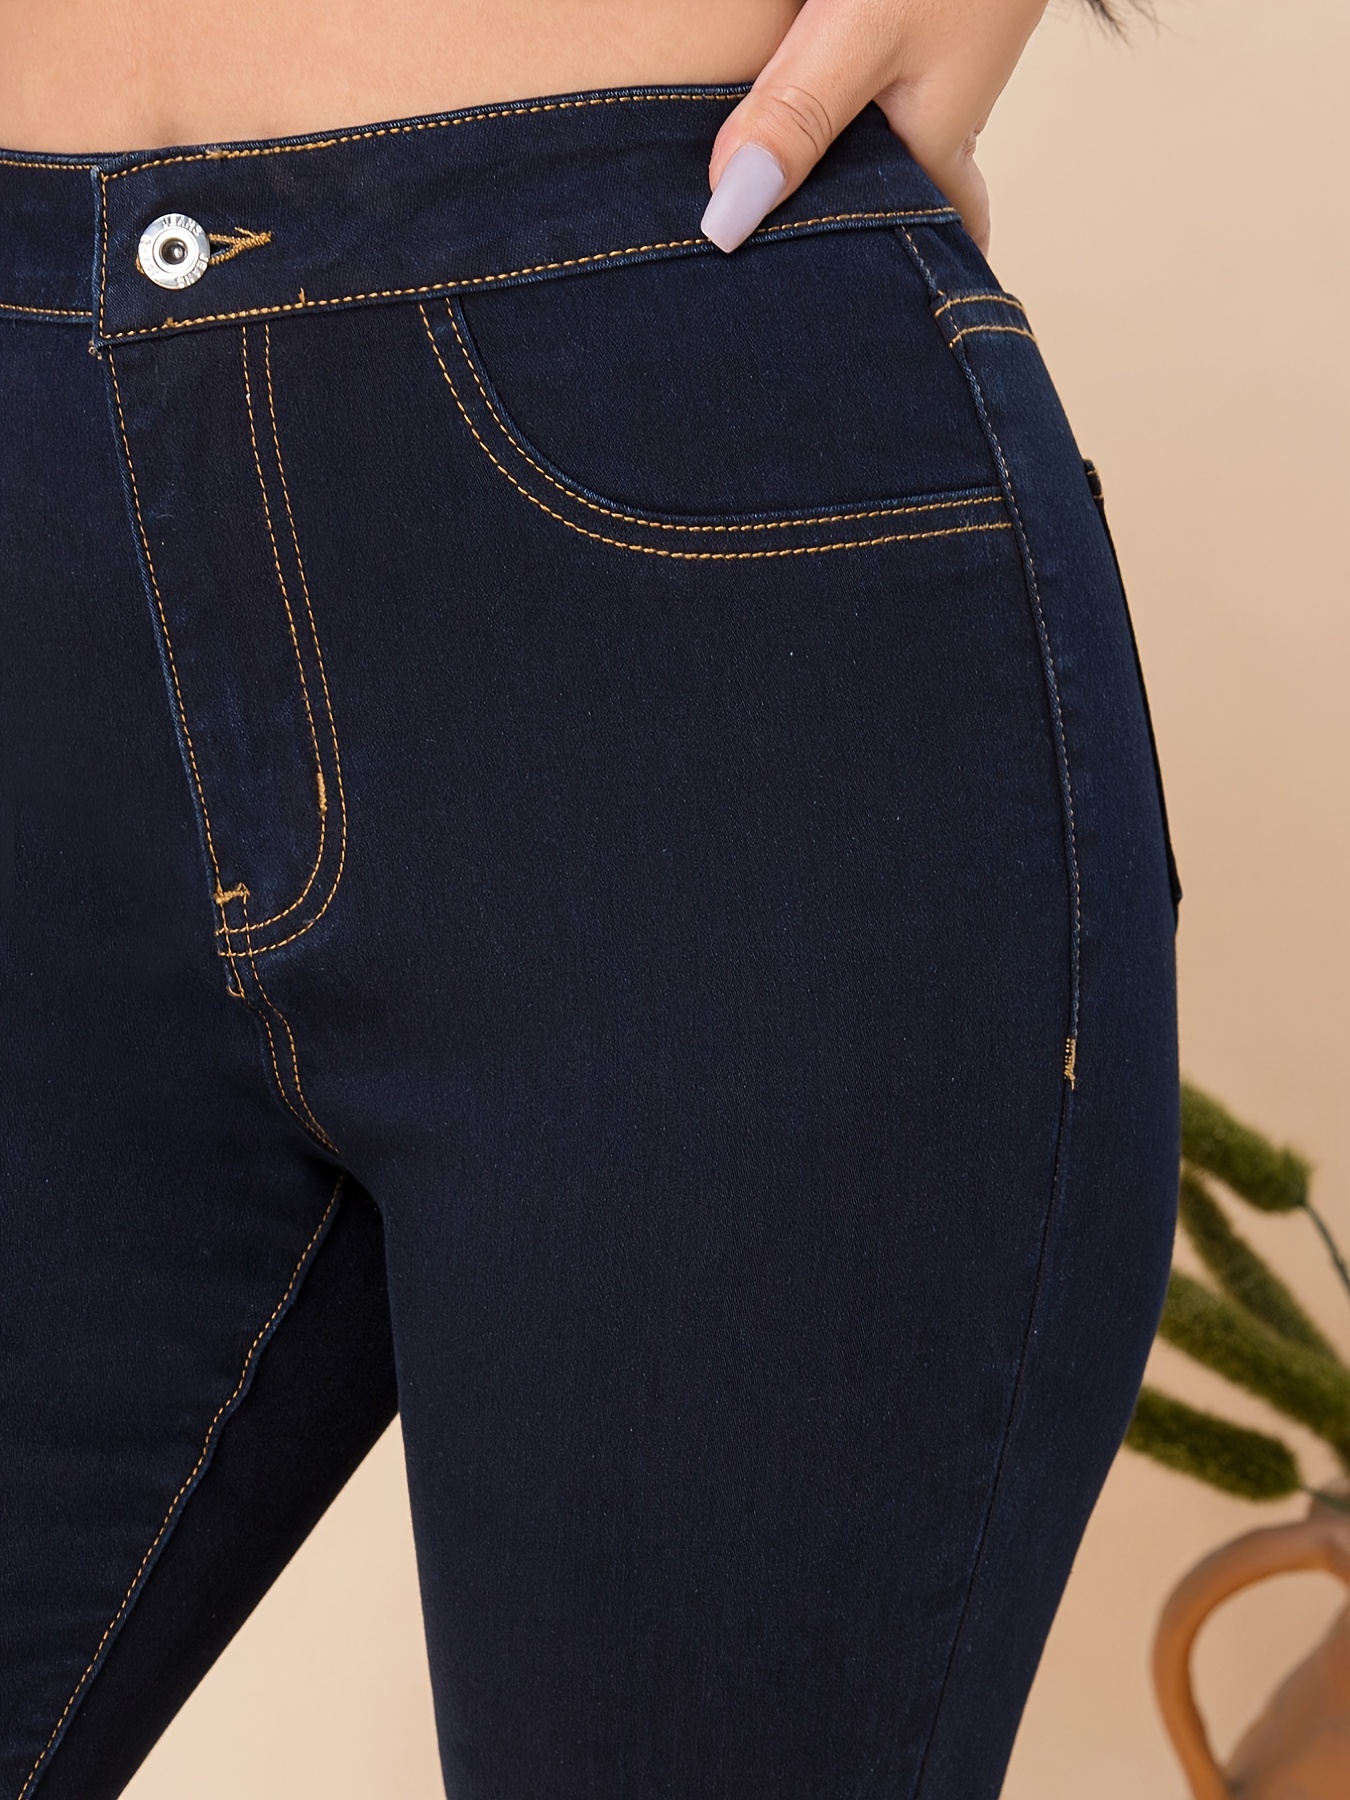 High * Curvy Plain Design Legs Dark Blue Skinny Jeans, High Waist Stretchy  Denim Pants, Women's Denim Jeans, Women's Clothing